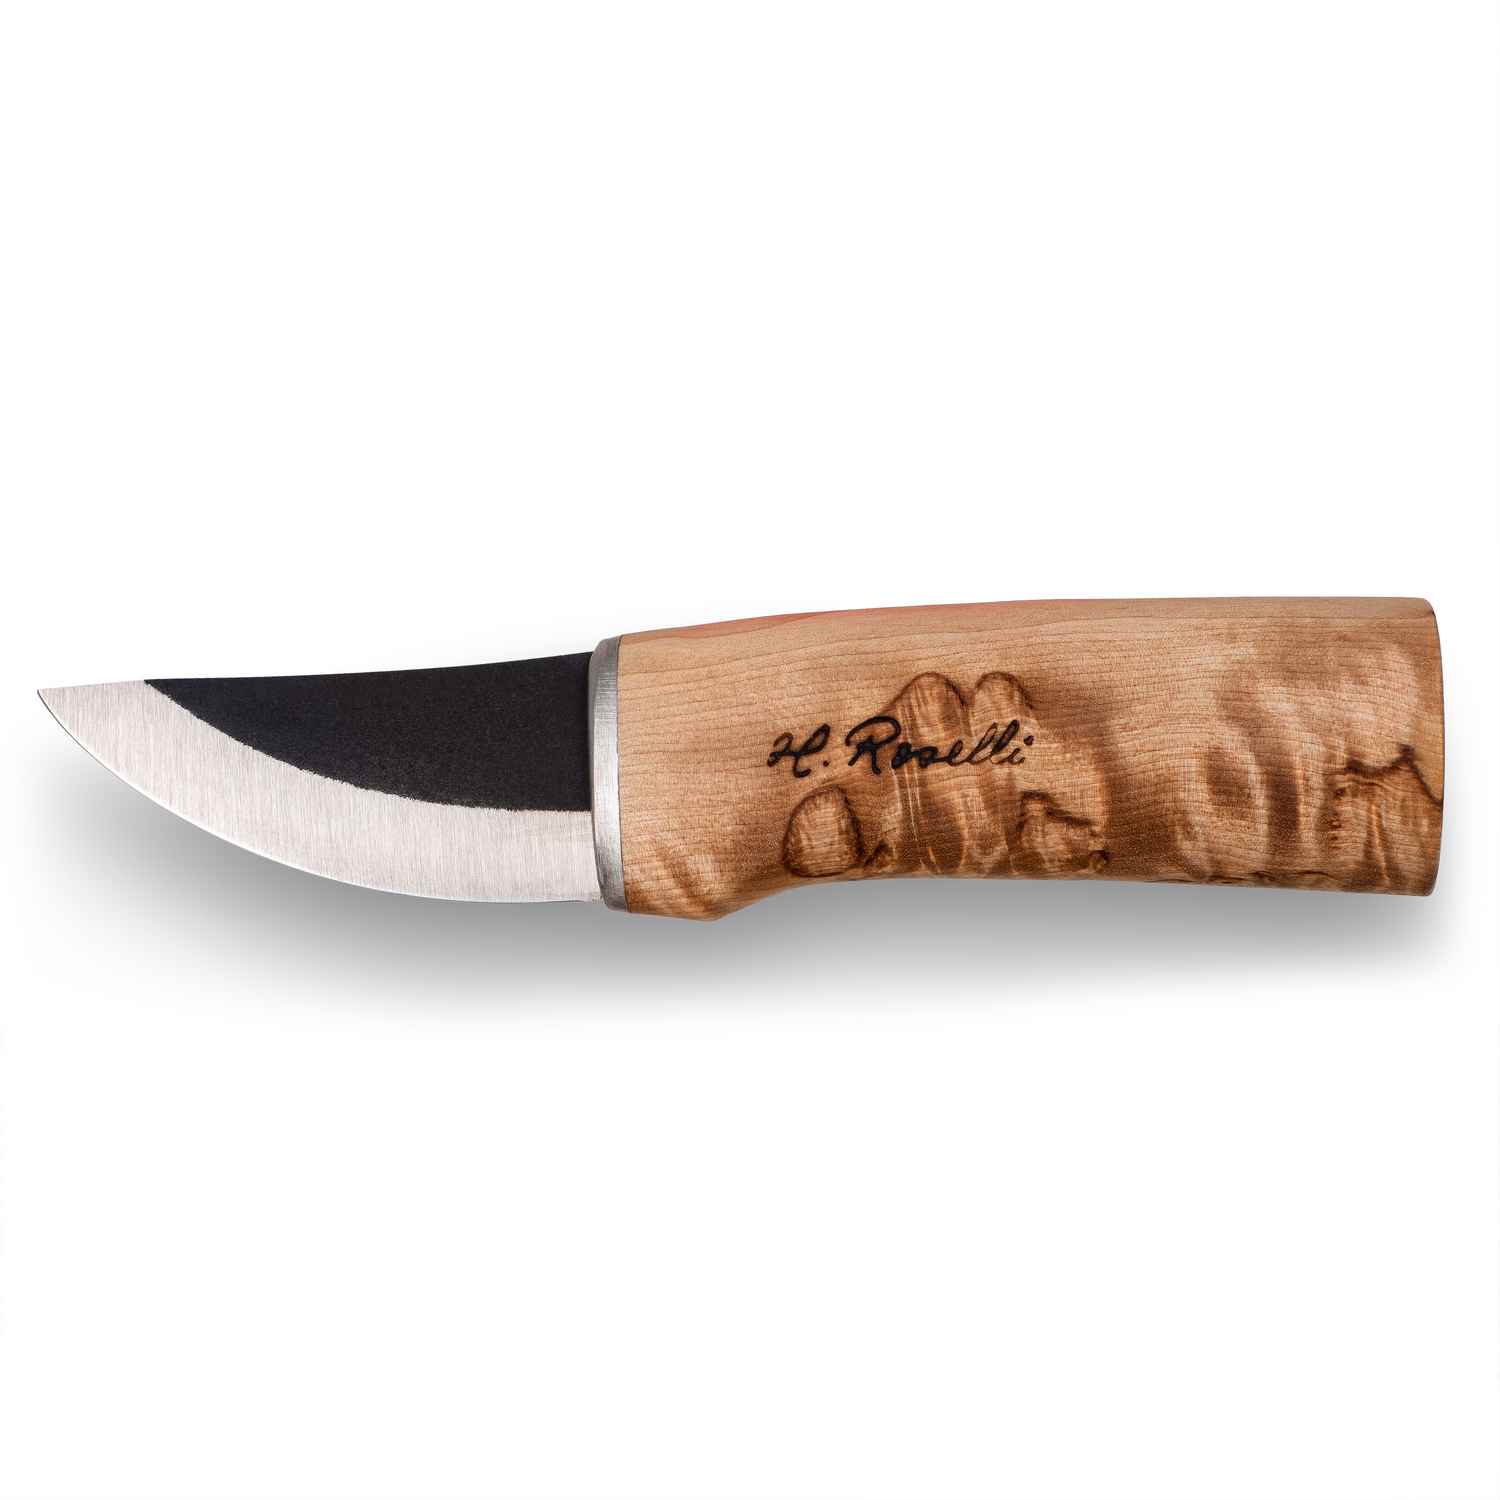 Roselli R120 "Grandfather Knife"